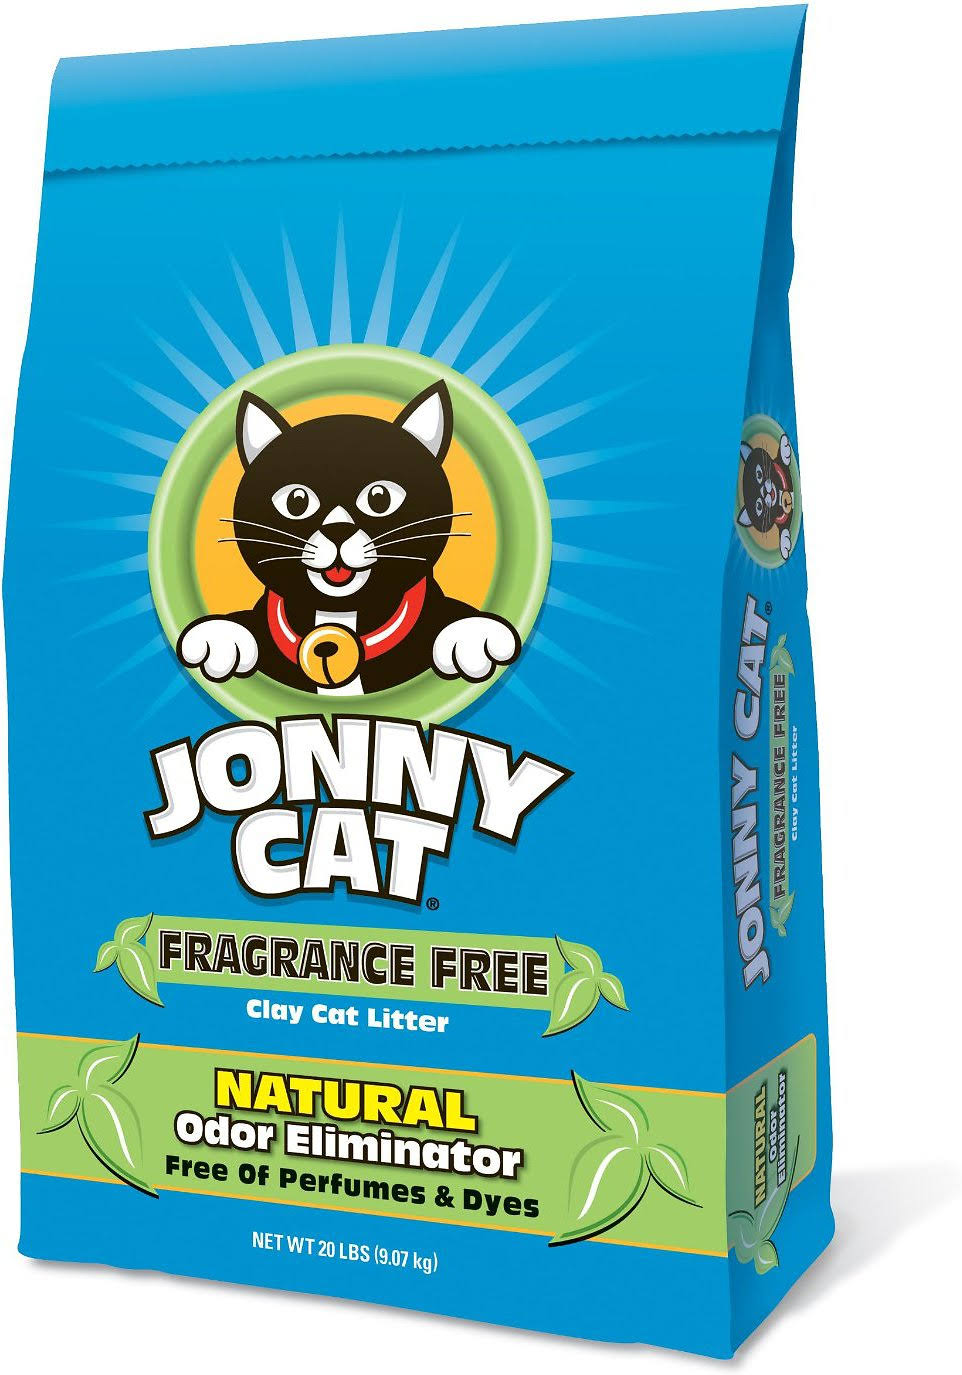 Jonny Cat Fragrance Free Clay Cat Litter